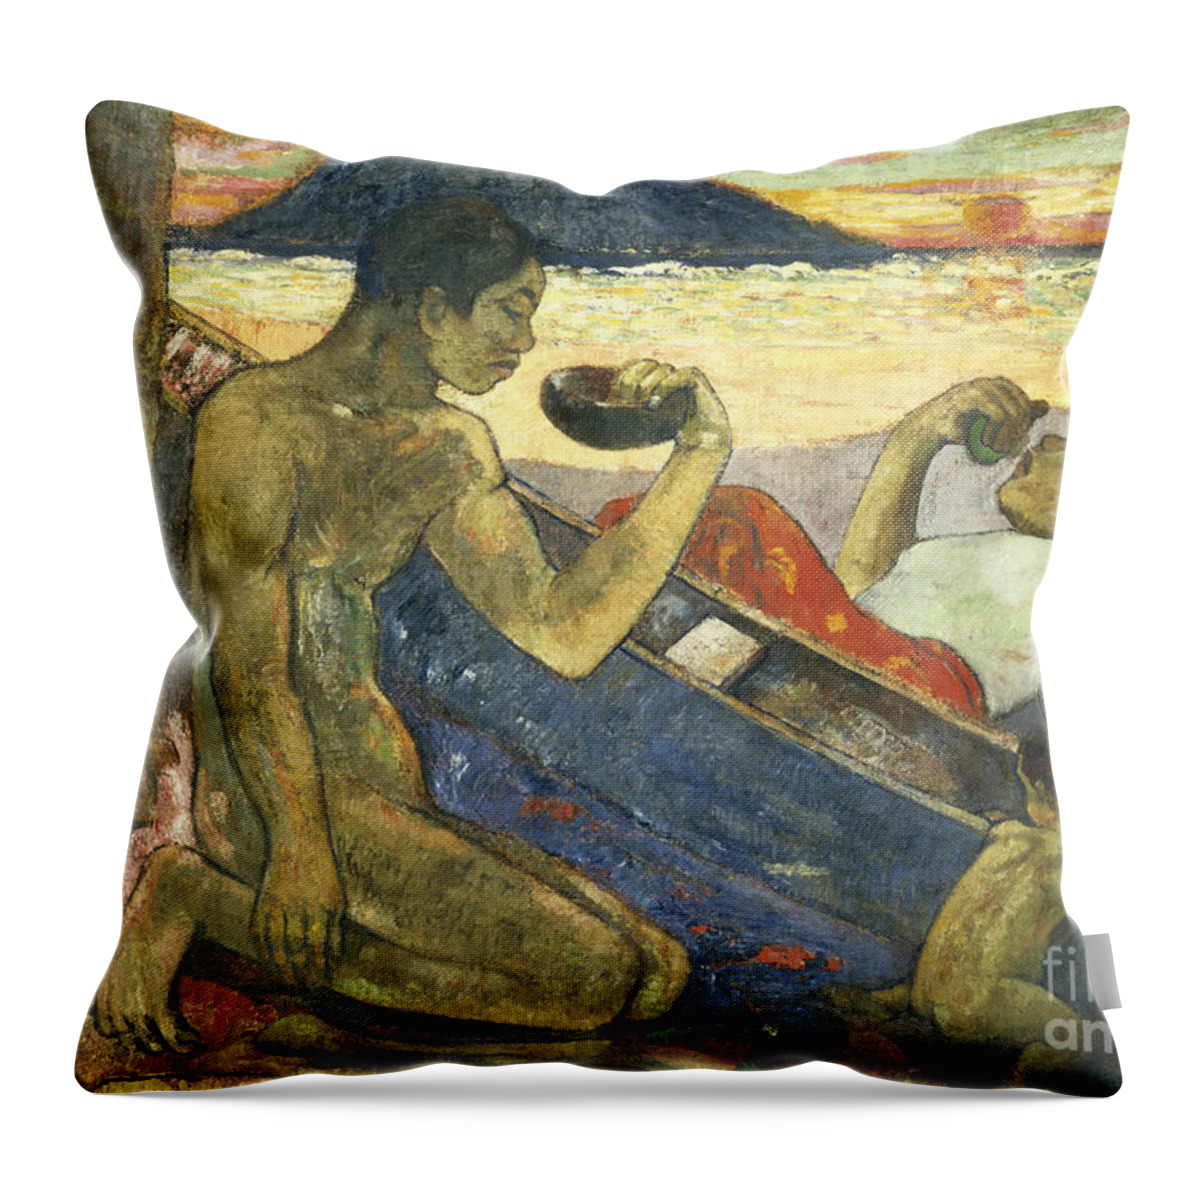 A Canoe Throw Pillow featuring the painting A Canoe by Paul Gauguin